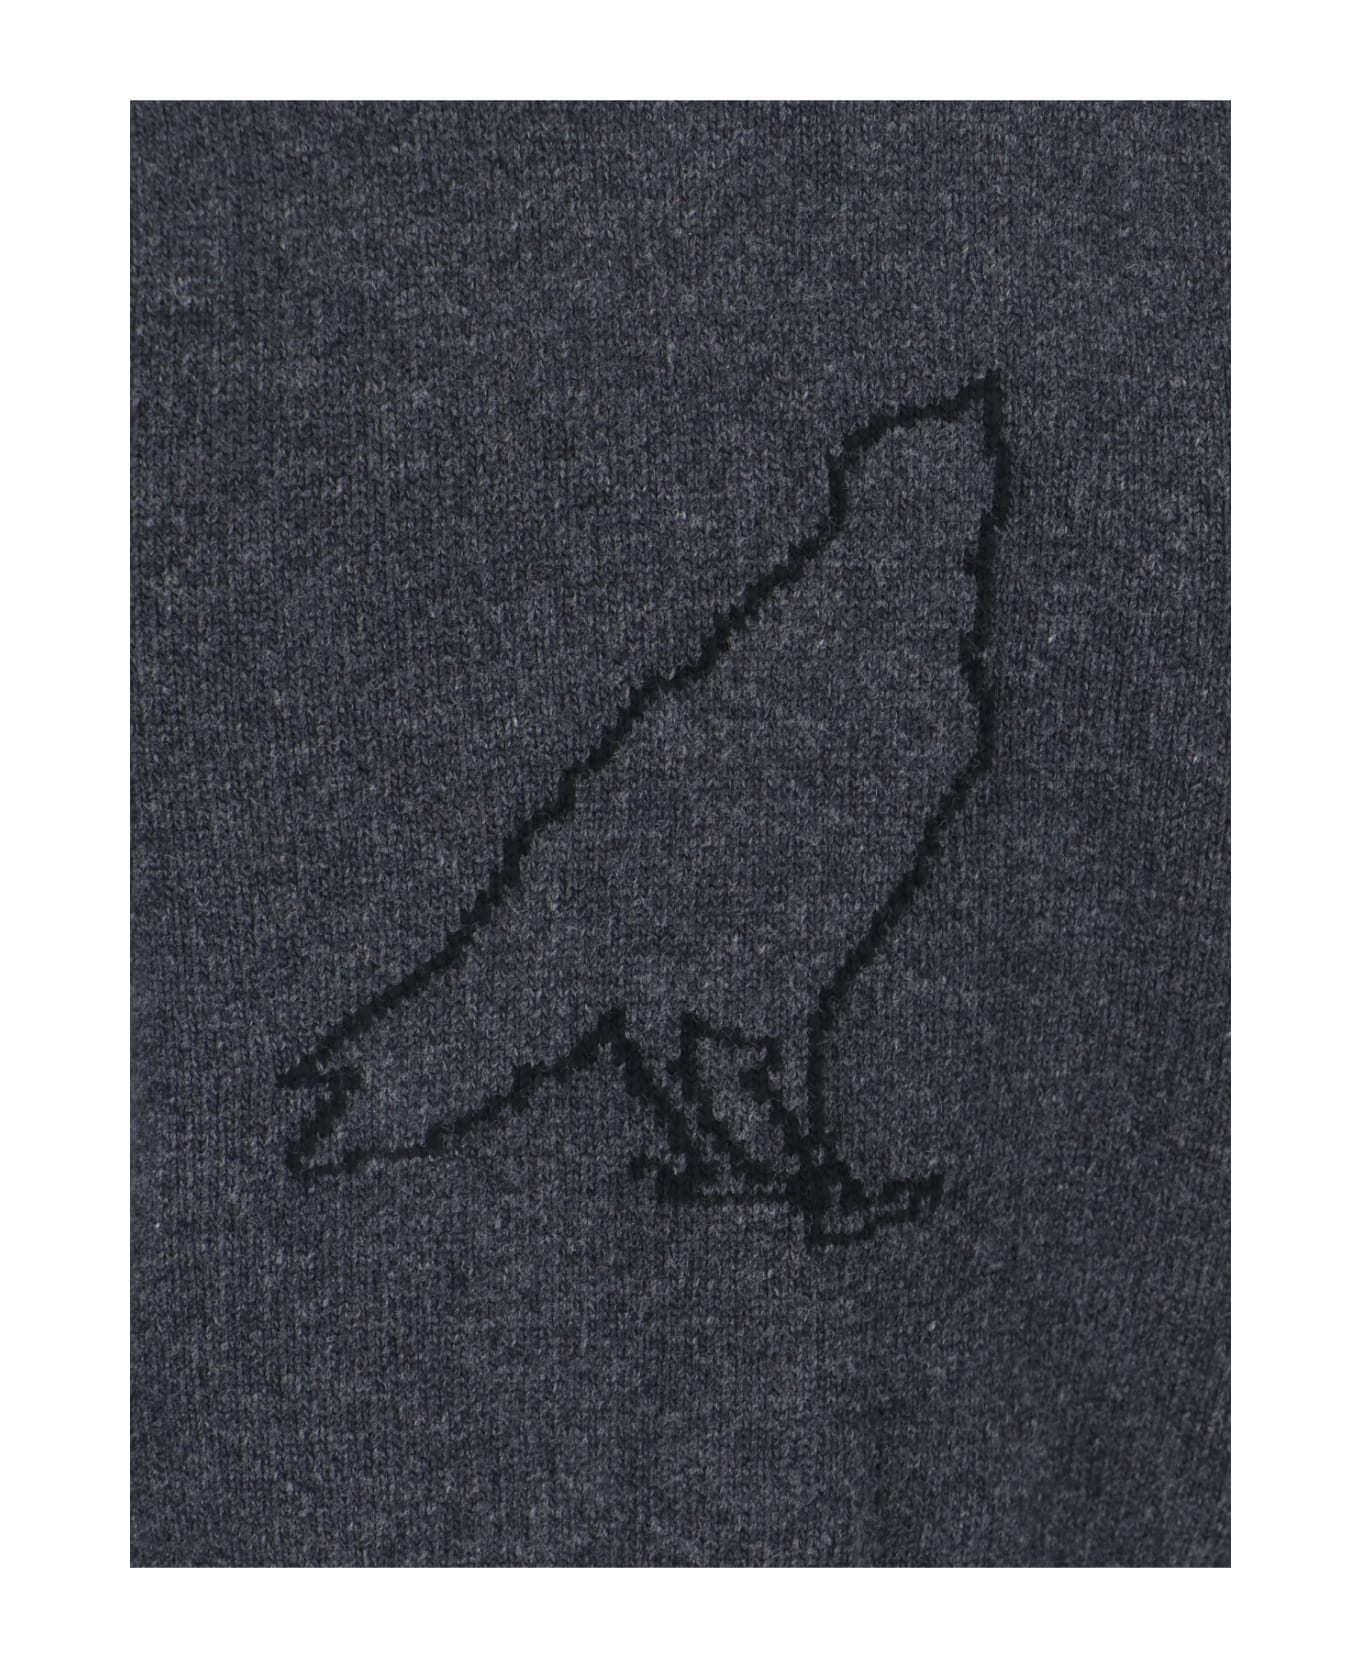 Thom Browne '4-bar' Sweater - Gray